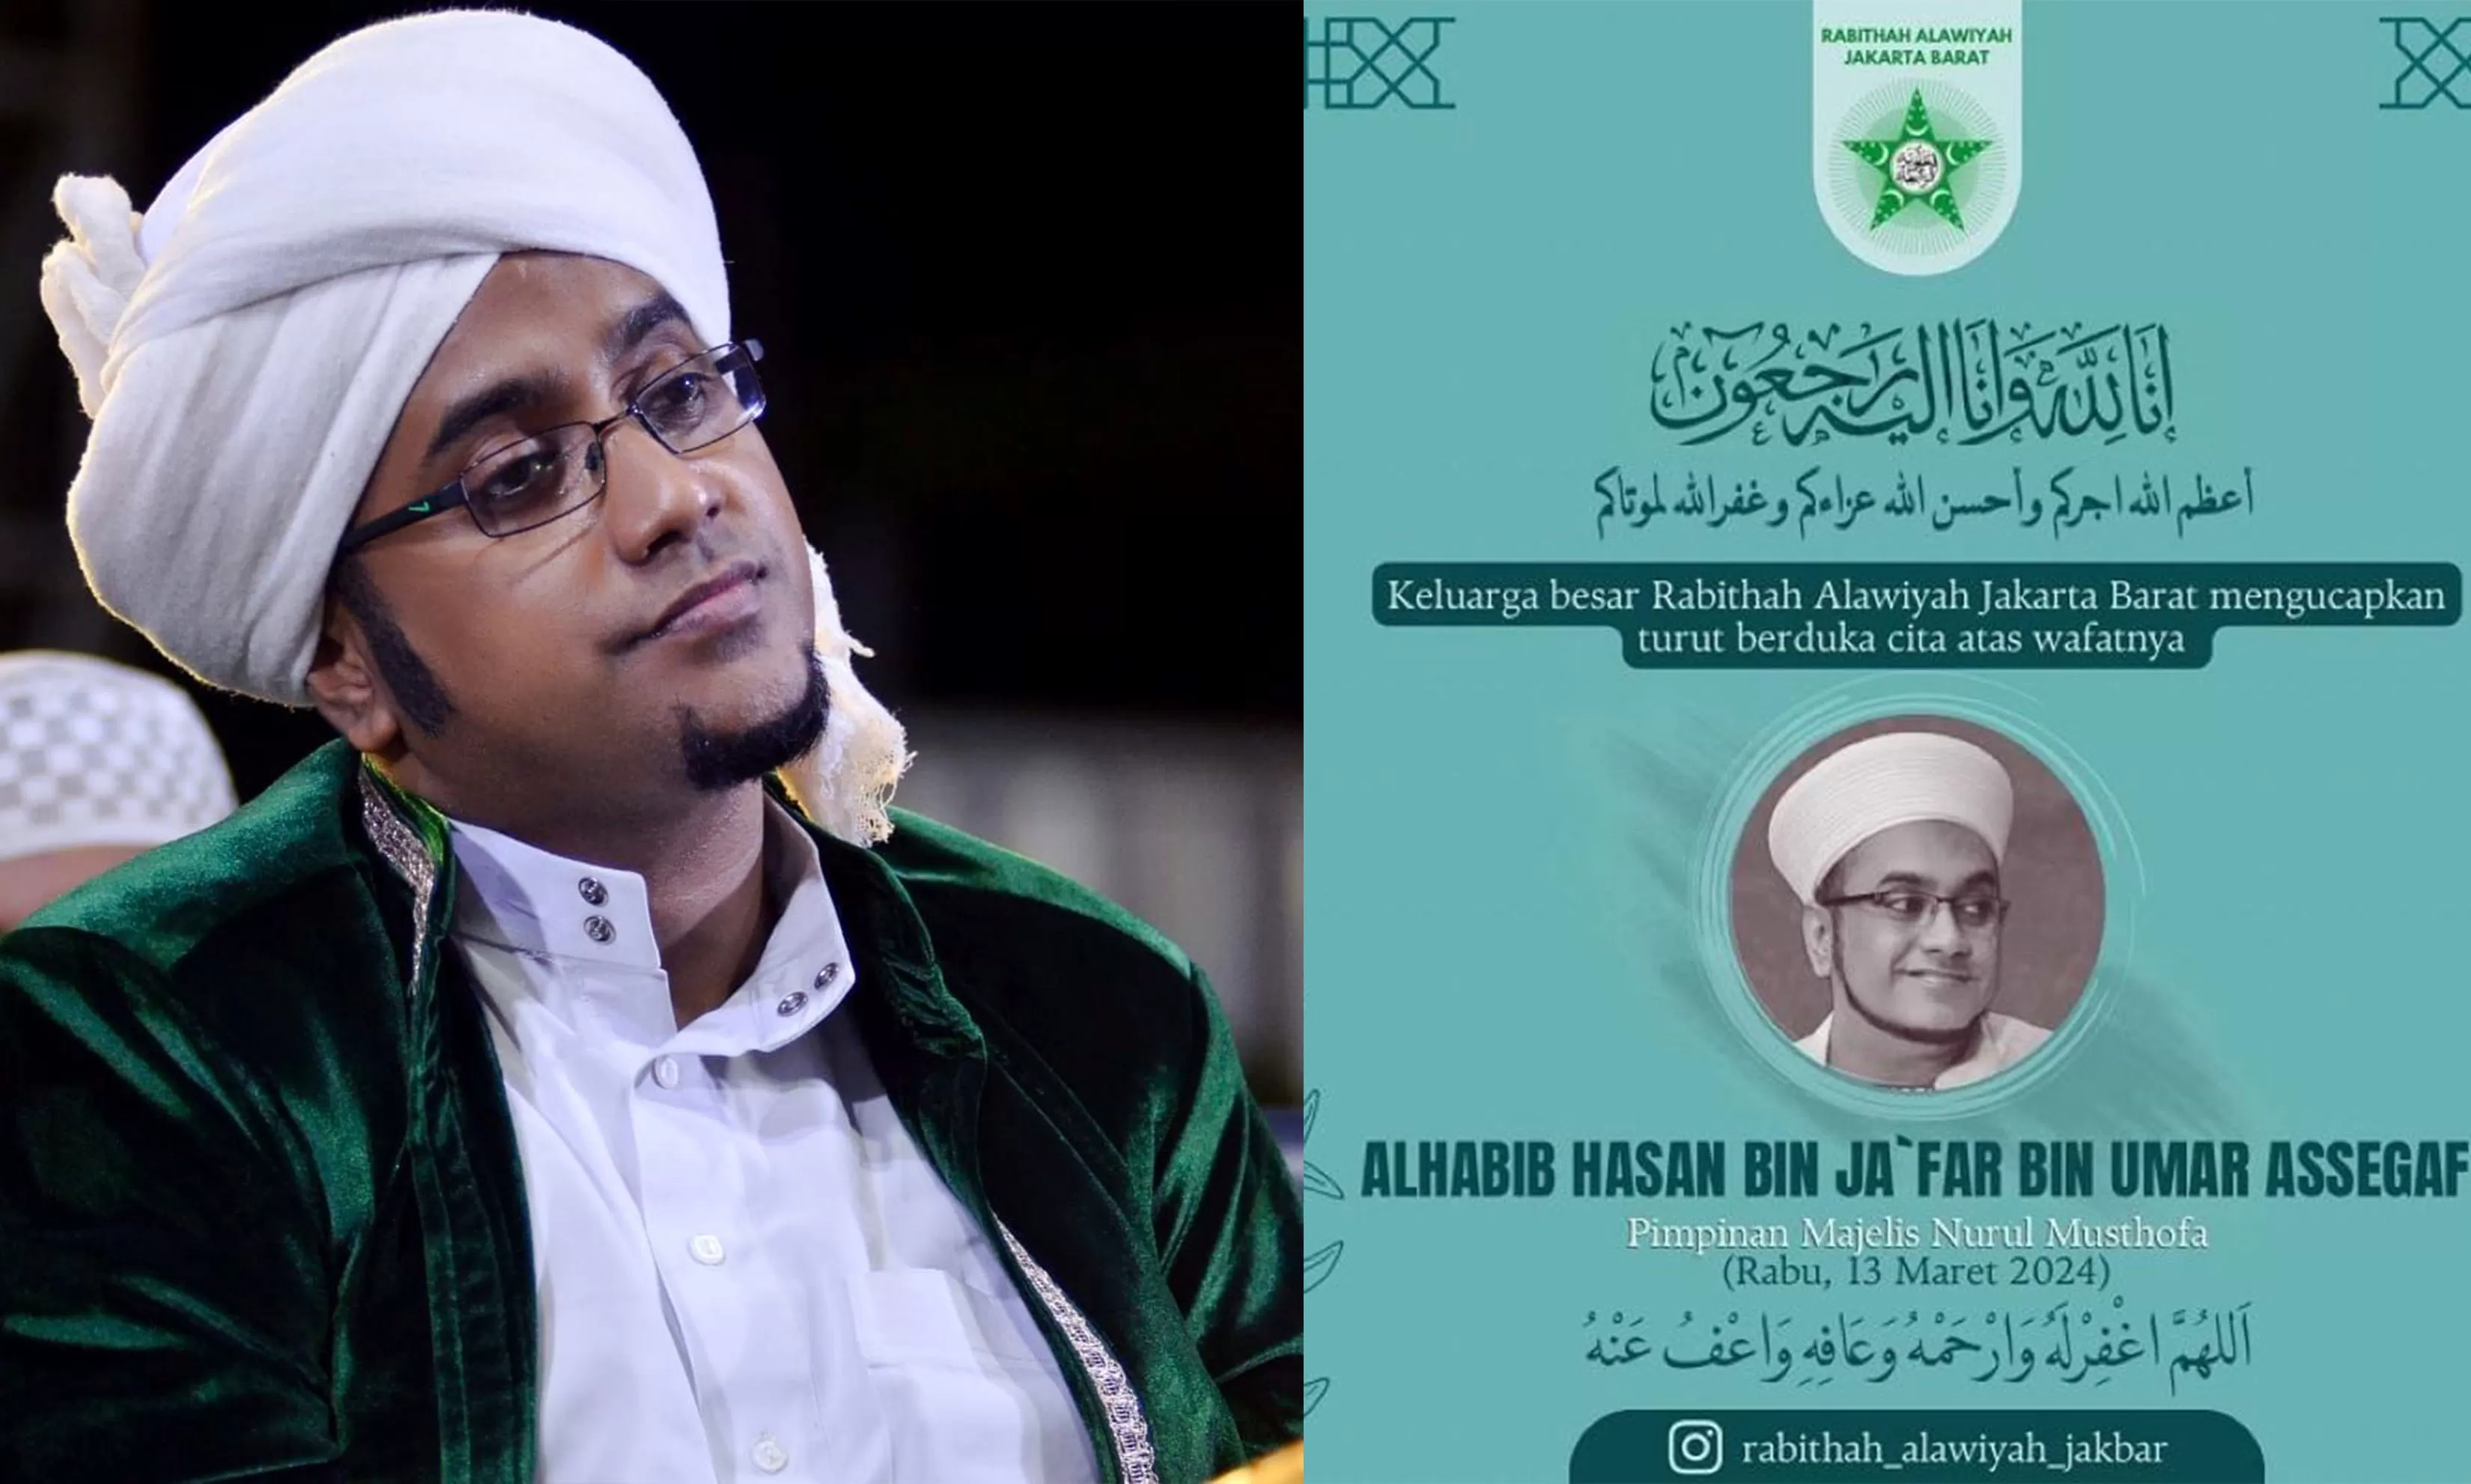 Habib Hasan bin Ja'far bin Umar Assegaf (Sinpo.id/Majelis Nurul MUsthofa)